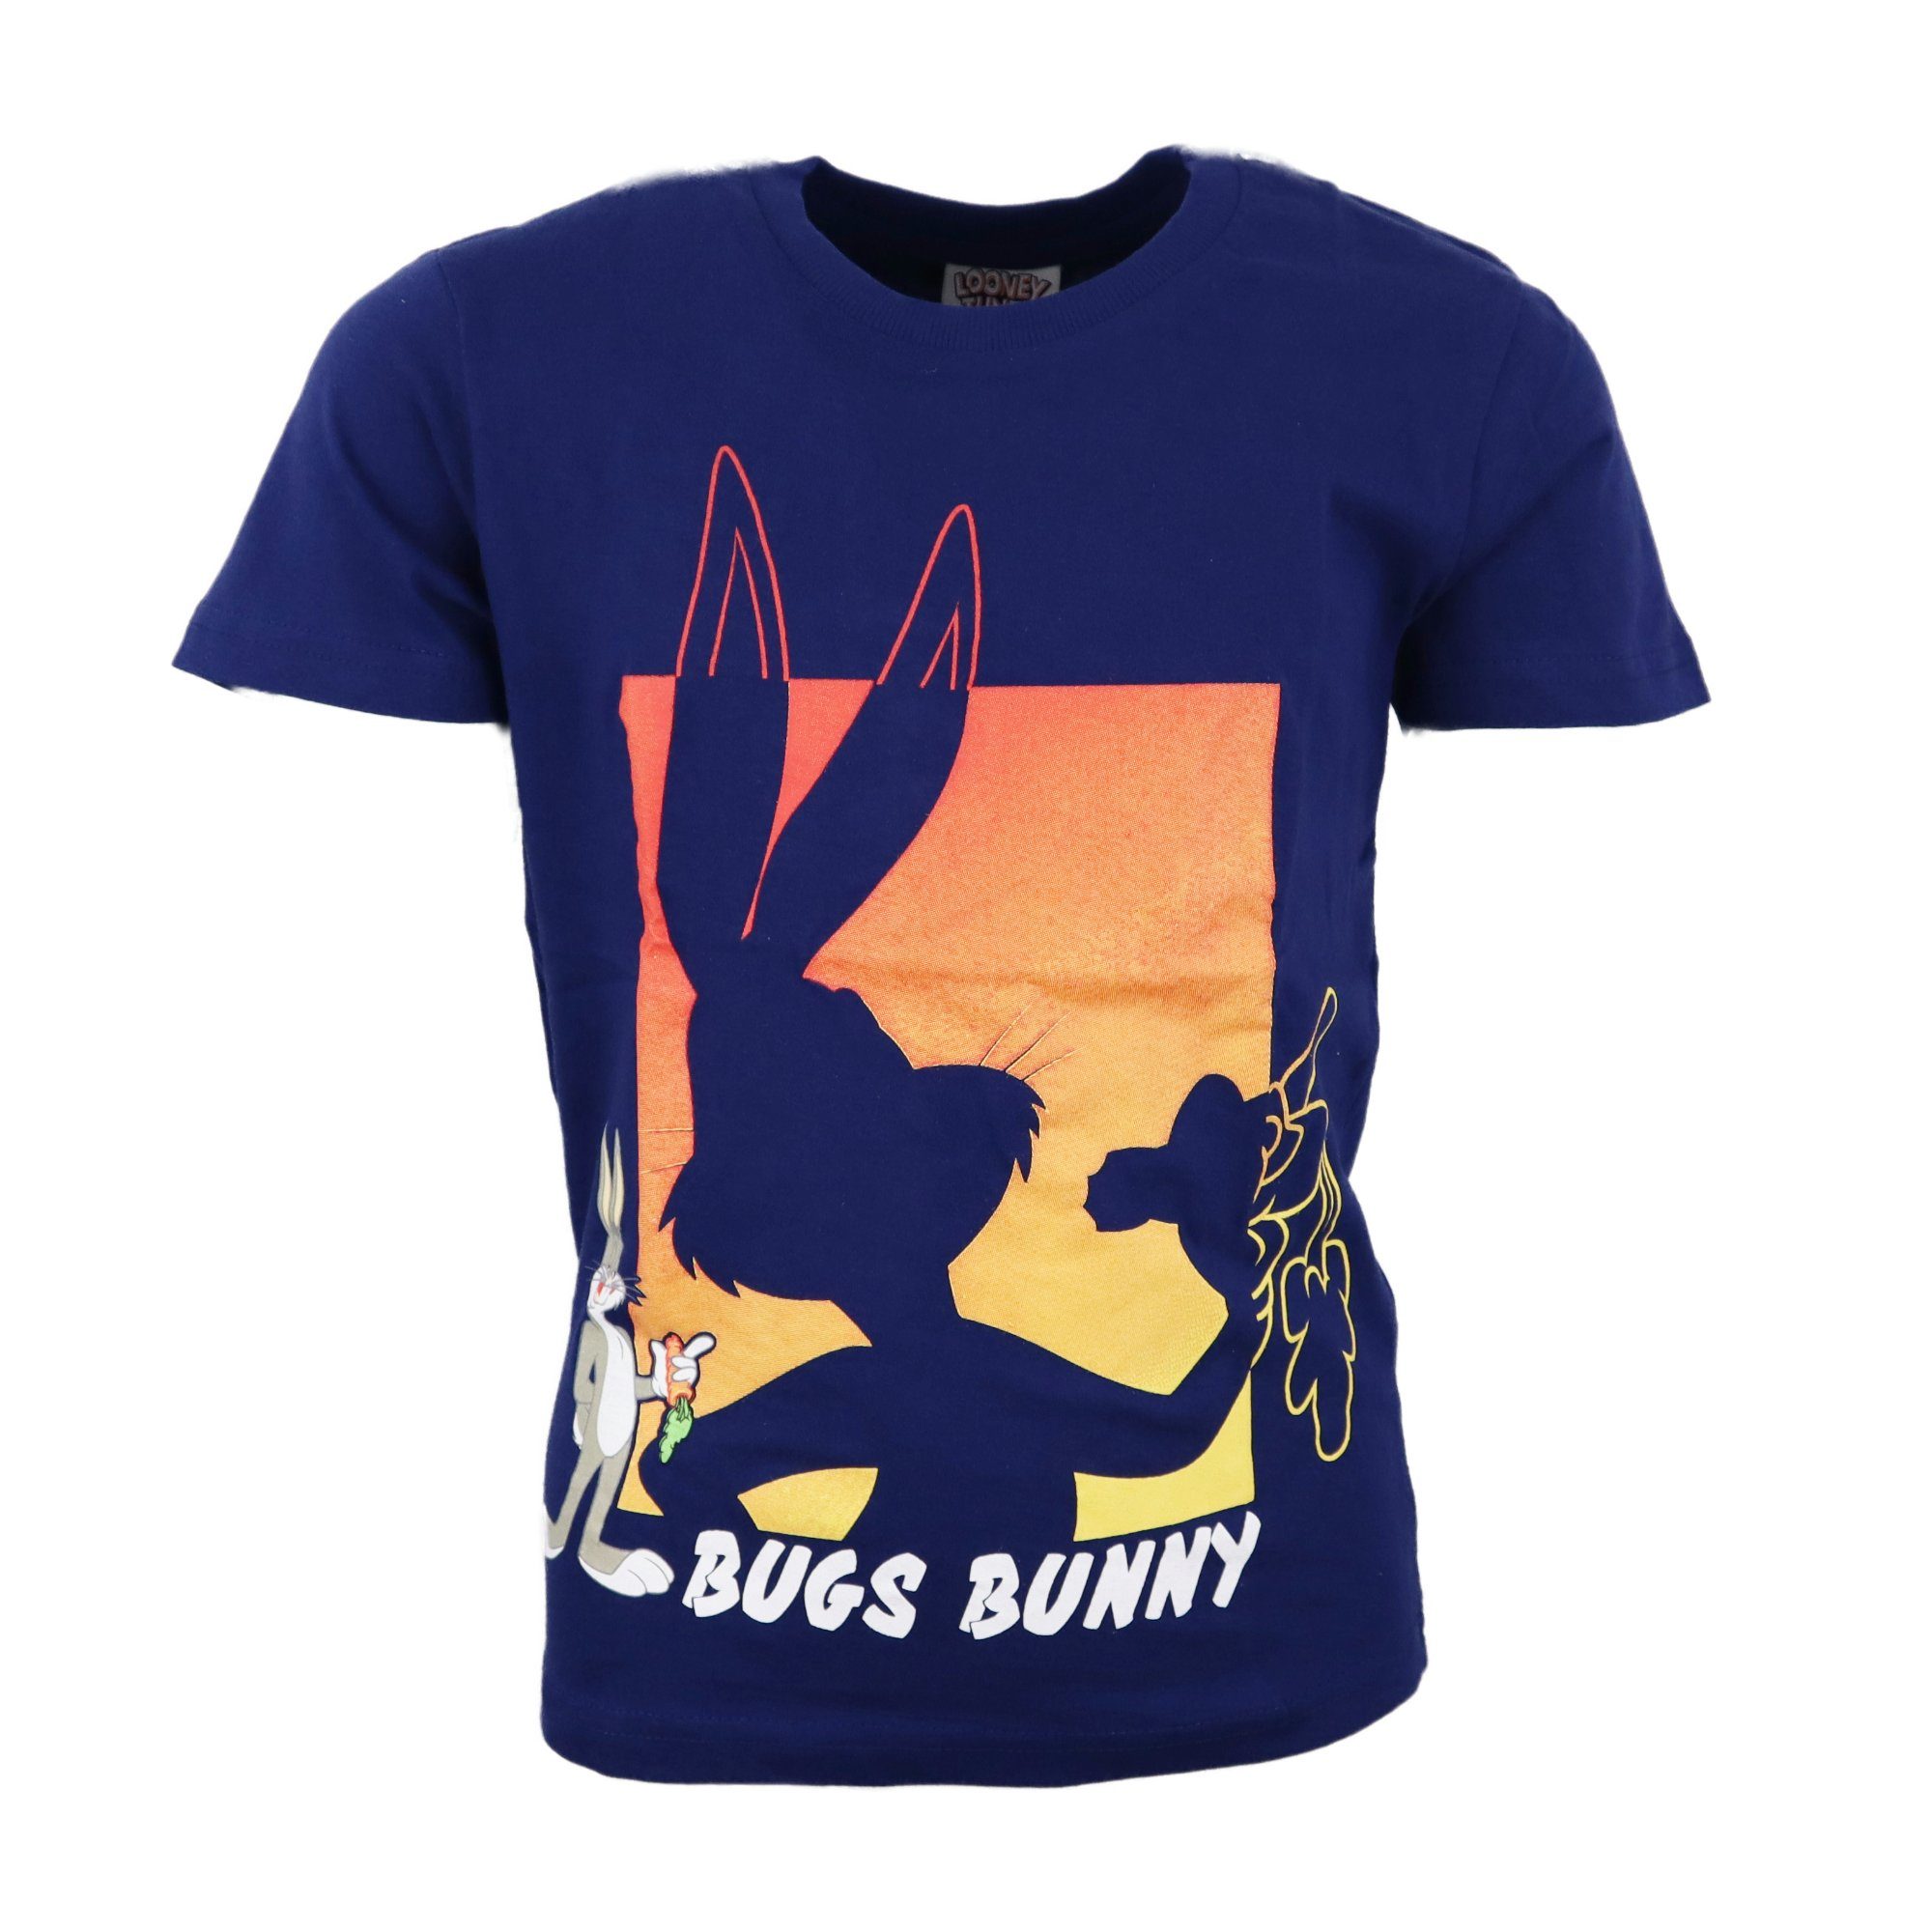 LOONEY TUNES Print-Shirt Bugs Bunny Kinder Jungen kurzarm Shirt Gr. 134 bis 164, Baumwolle Dunkelblau